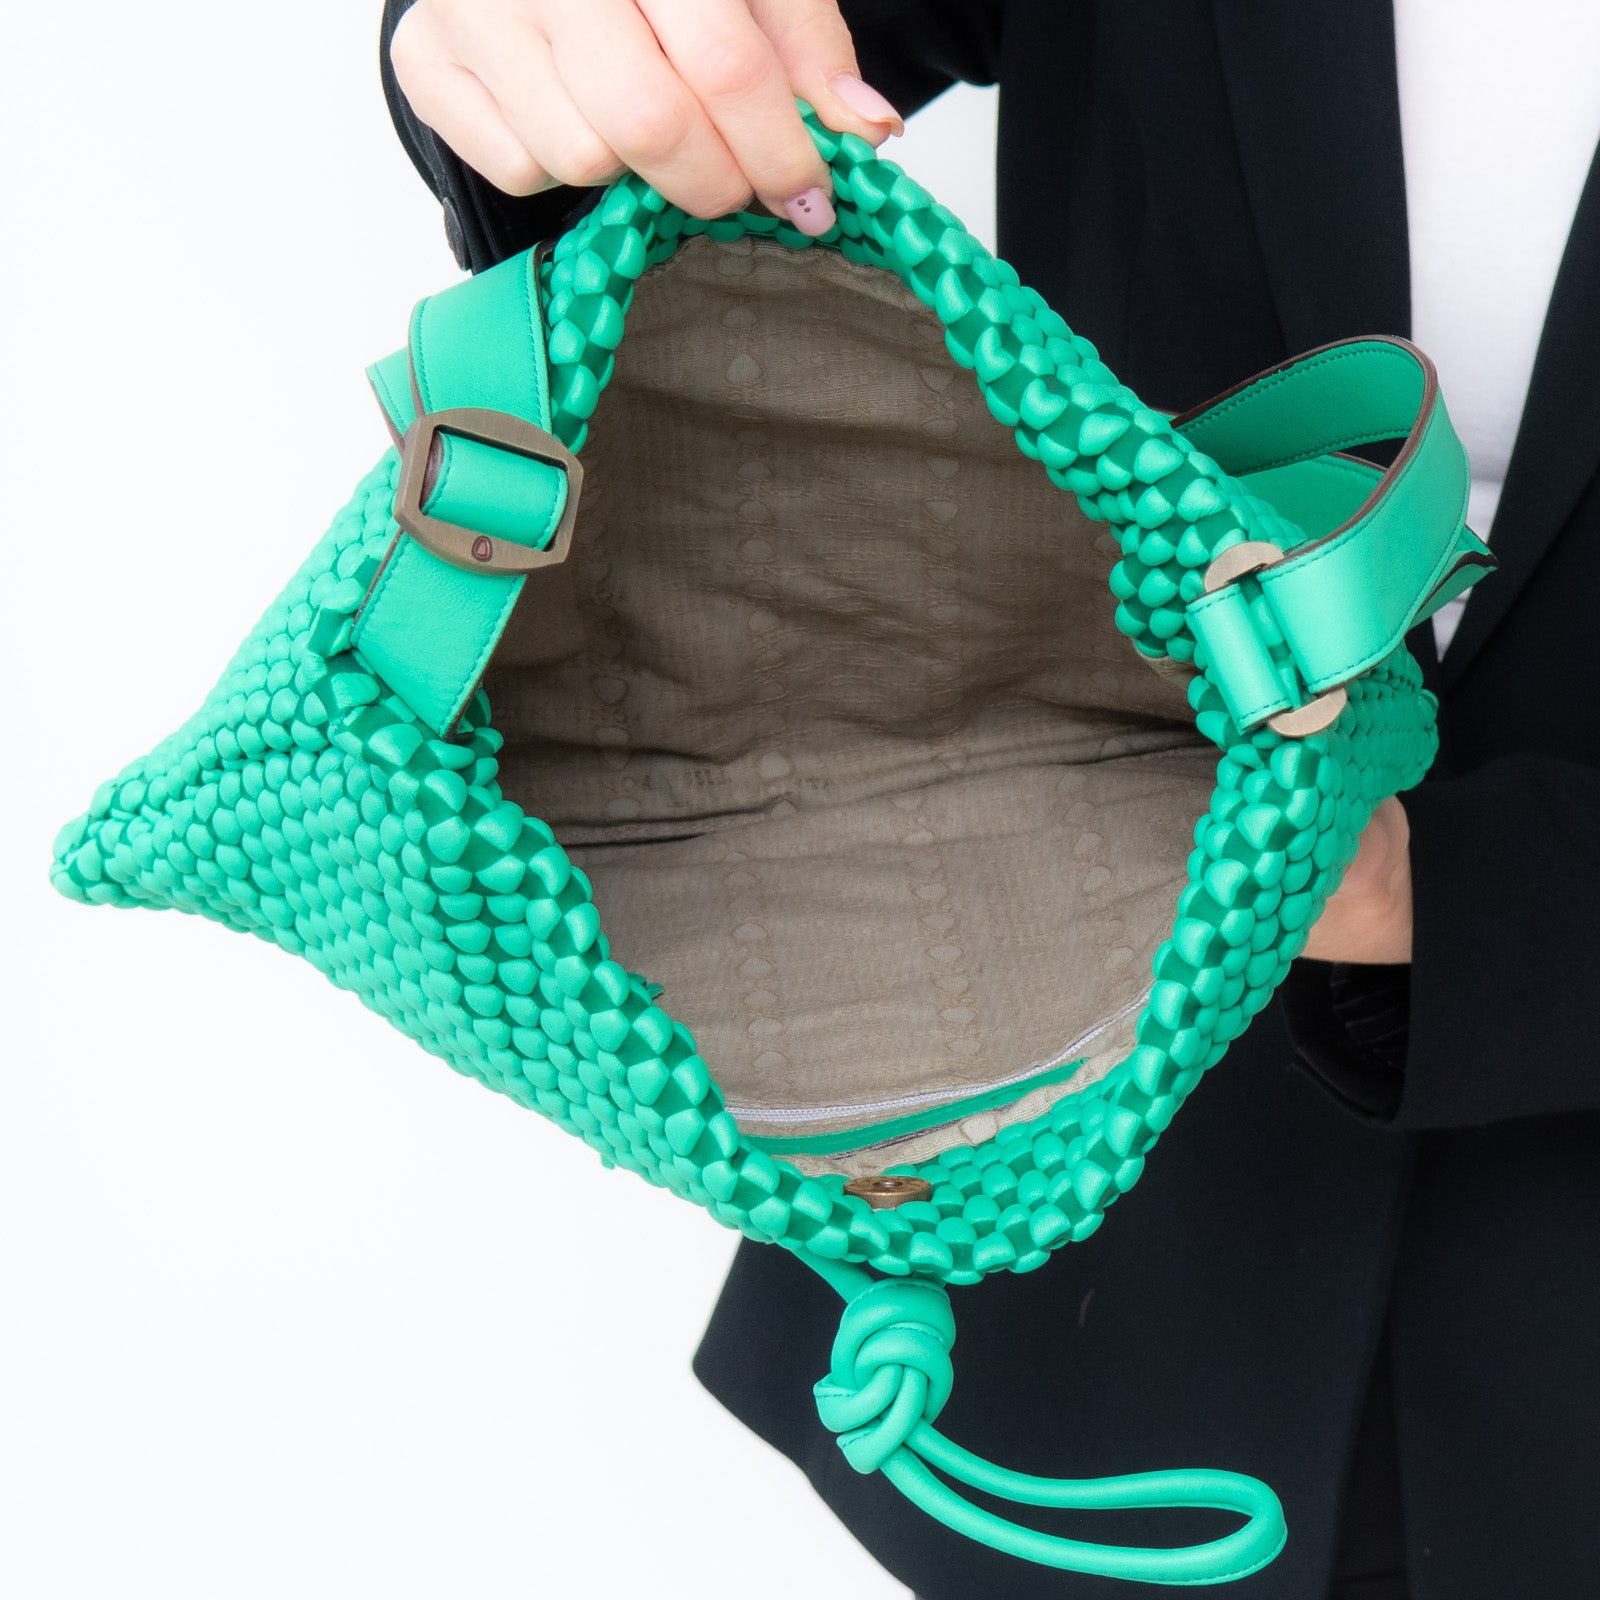 Tissa Fontaneda Bright Green Leather Bag - Image 8 of 8